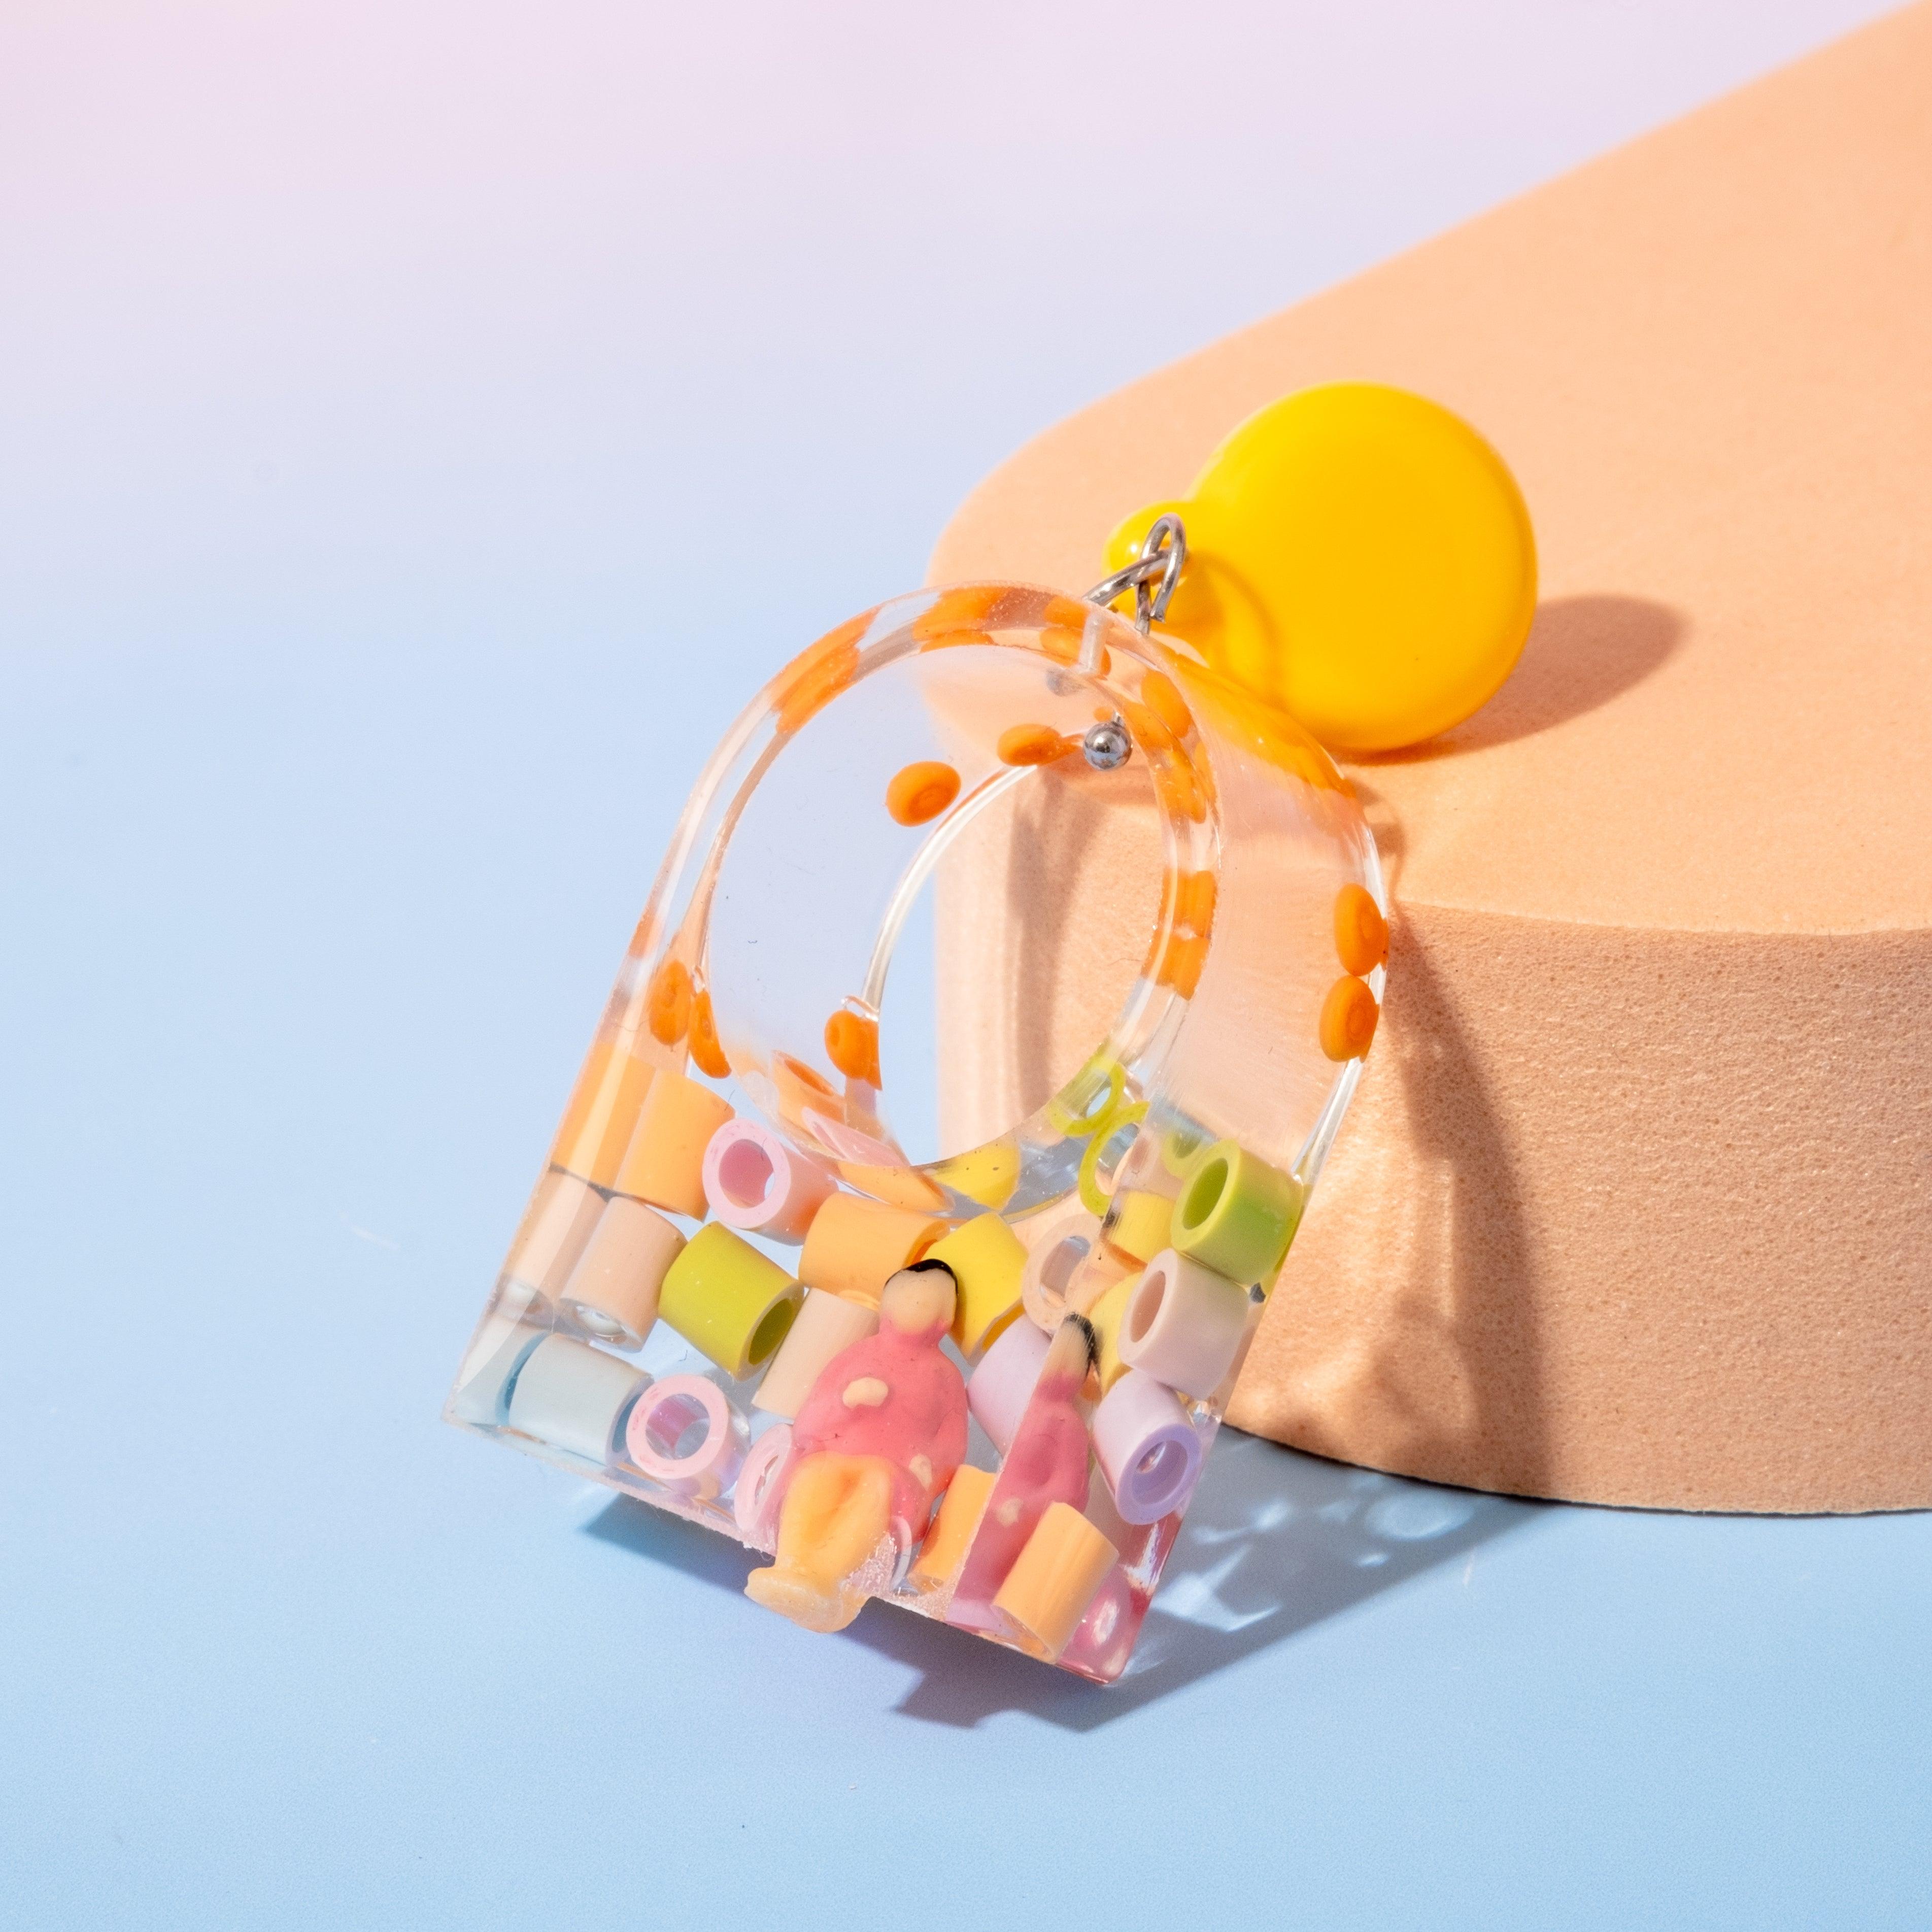 Candy handmade drop earrings | Gift for her – FunkyFunYou